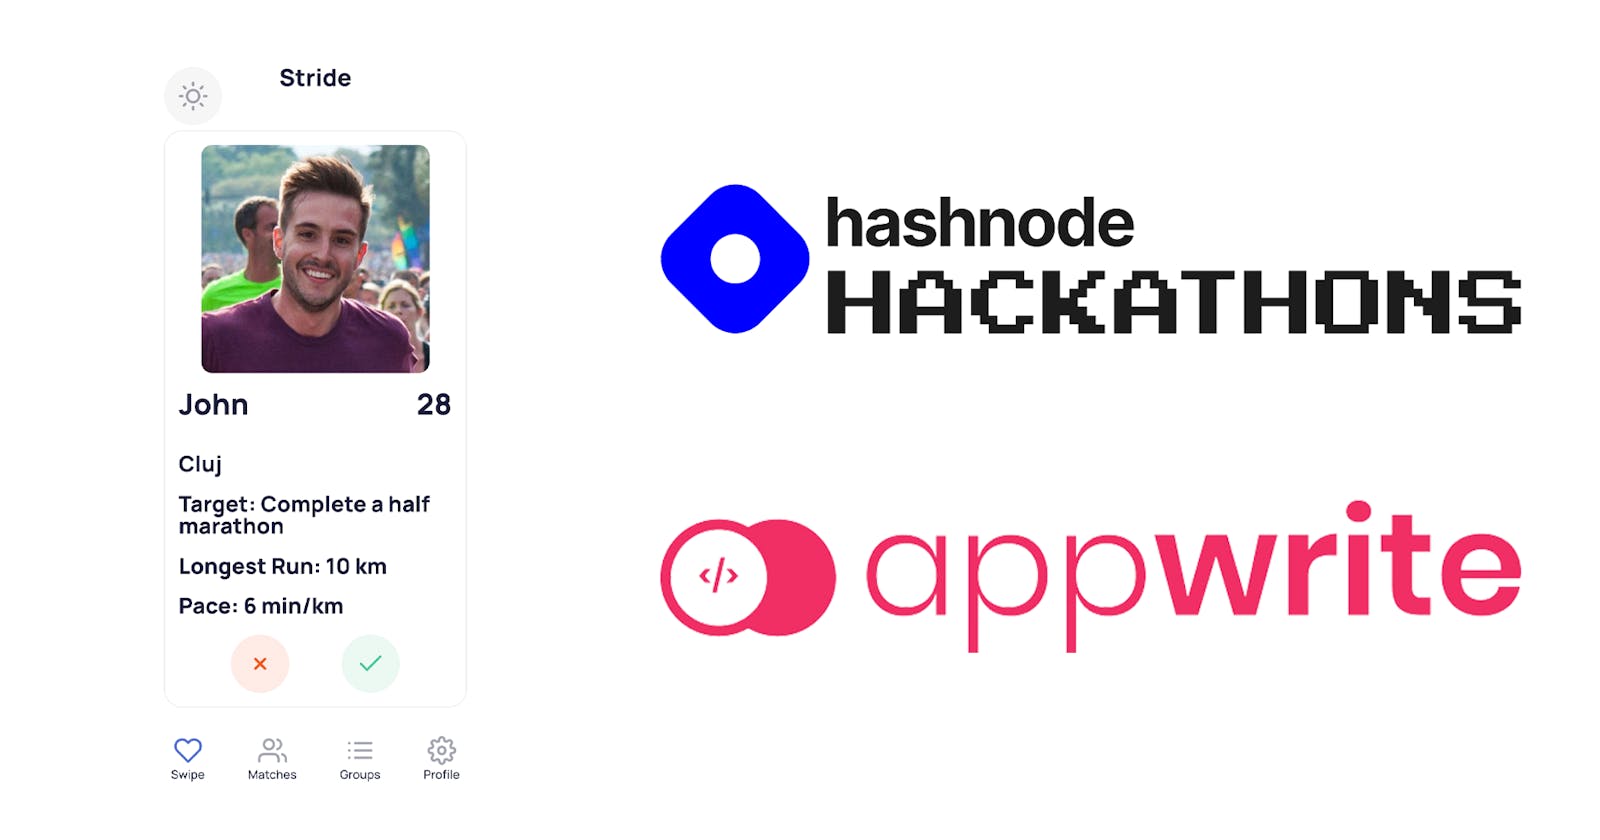 Stride - The story of Hashnode x Appwrite hackathon